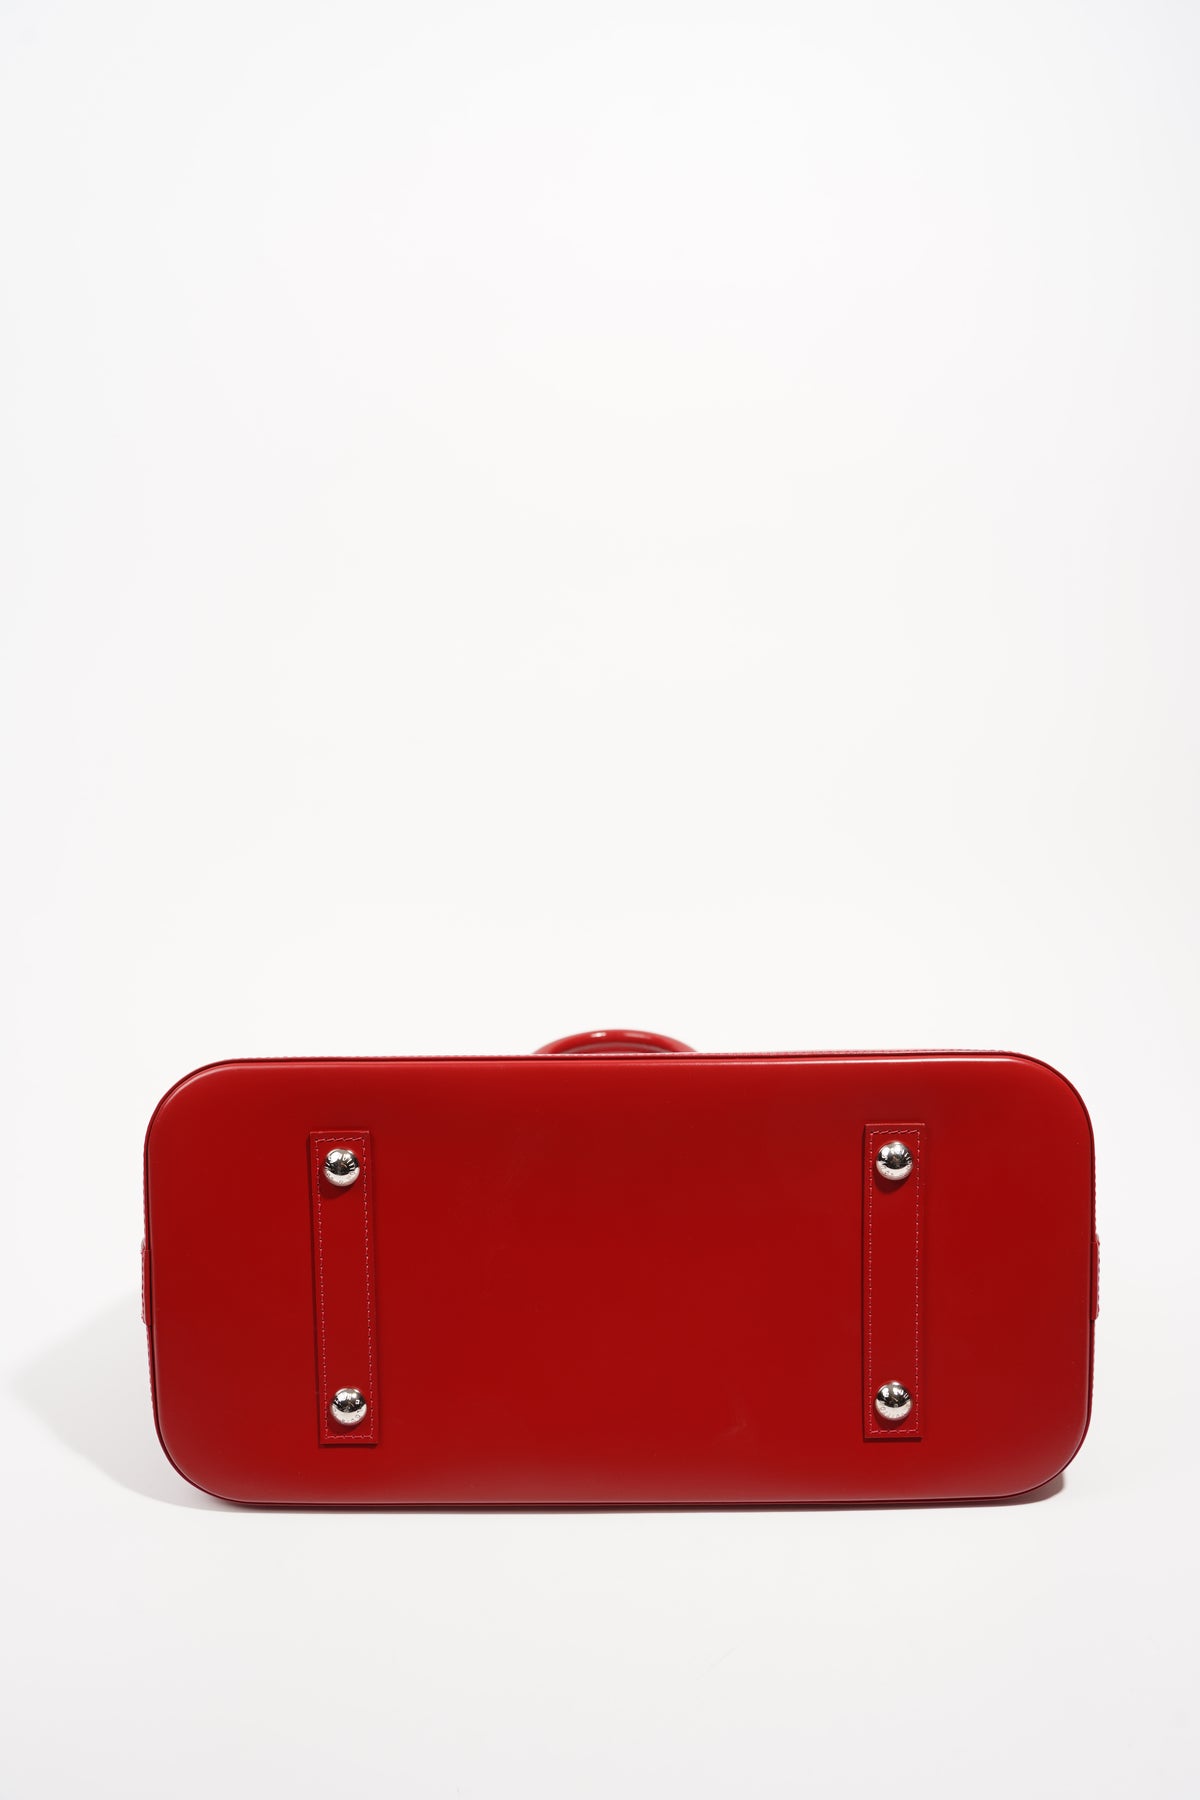 LV Alma Dark Red Epi Leather PHW Size 30 × 22 × 14 cm Made in